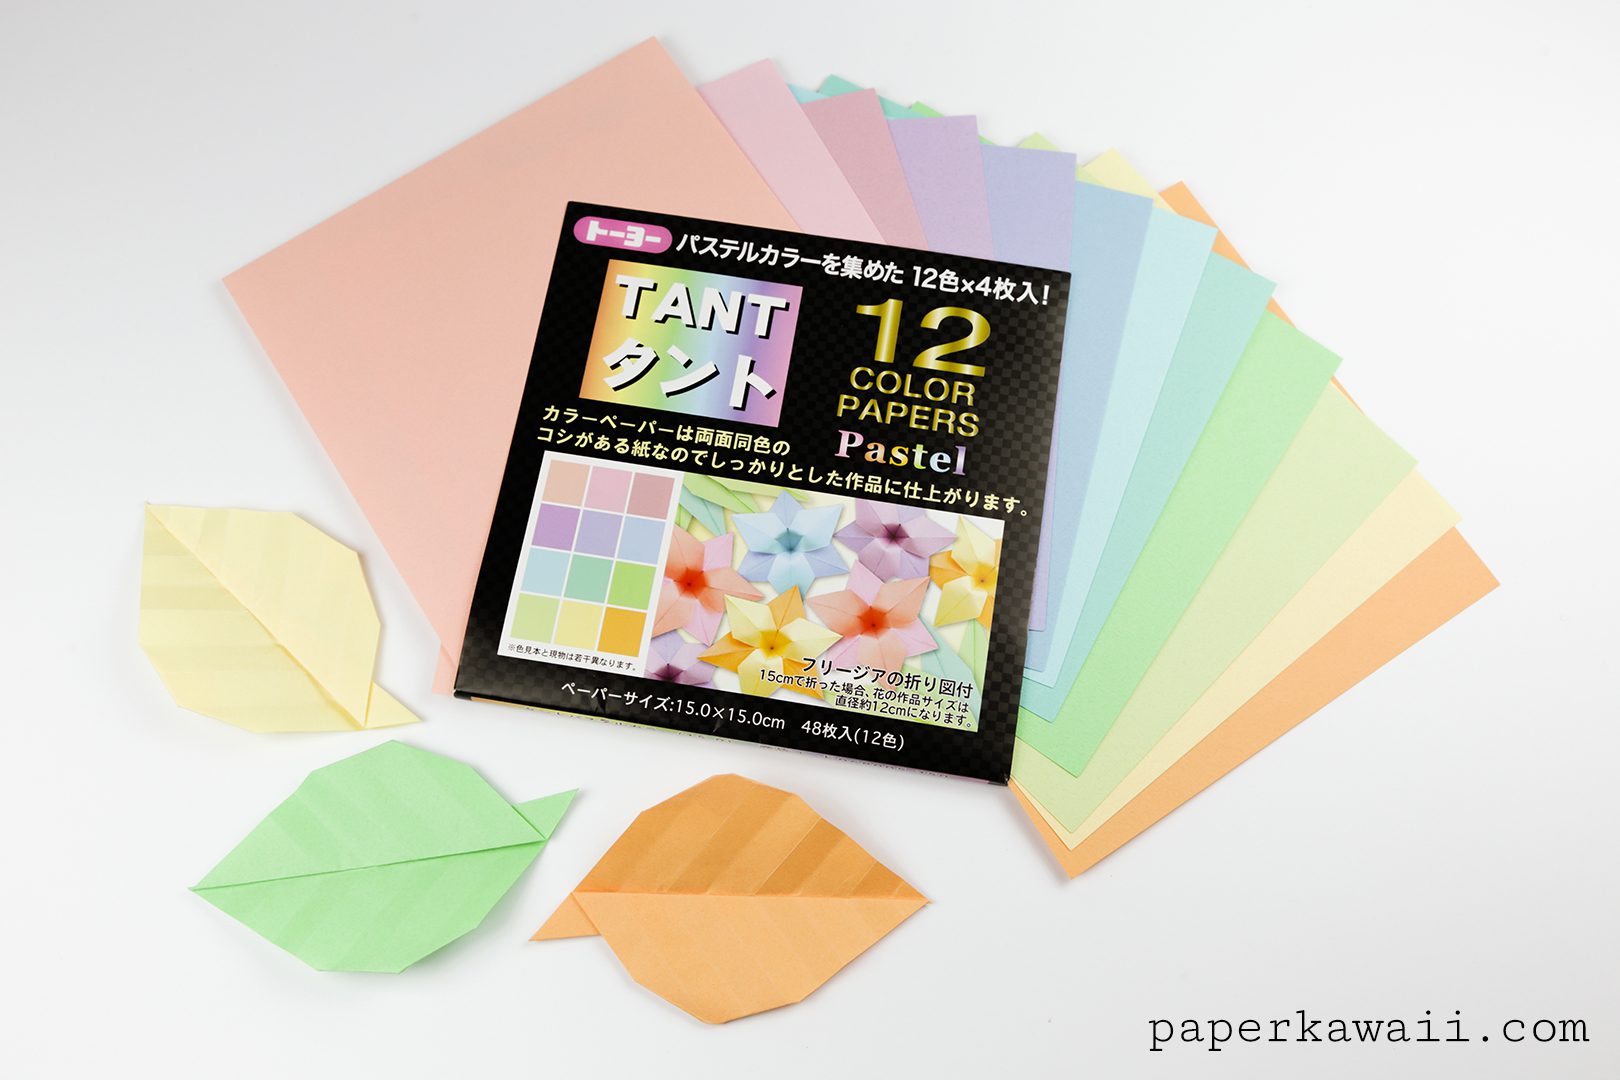 Tant pastel origami paper pack